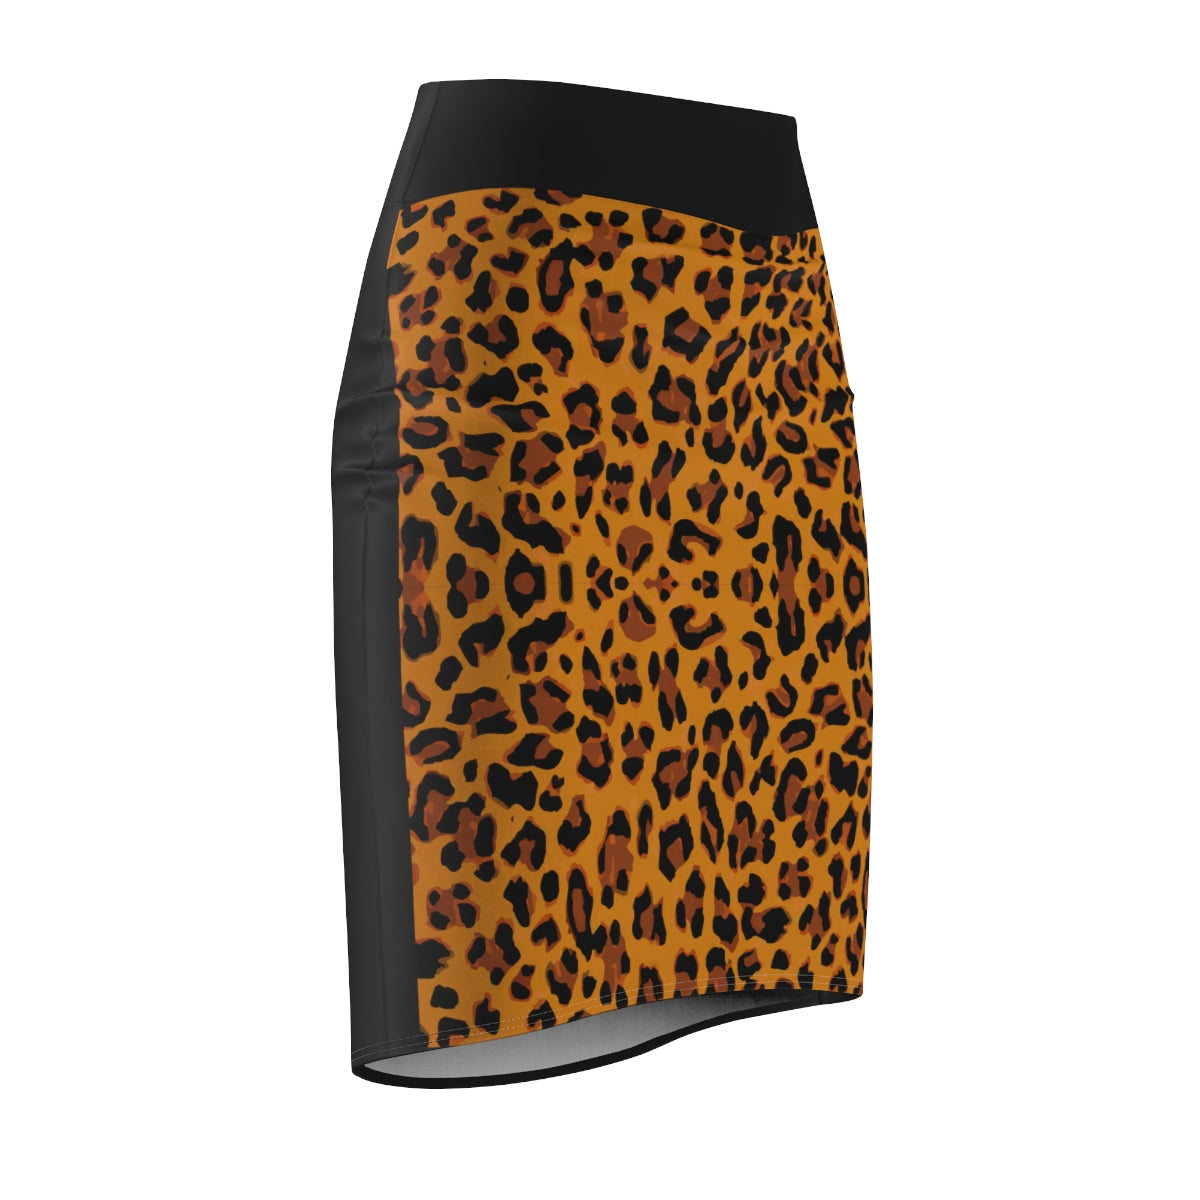 Five Toes Down Cheetah Print Women's Pencil Skirt